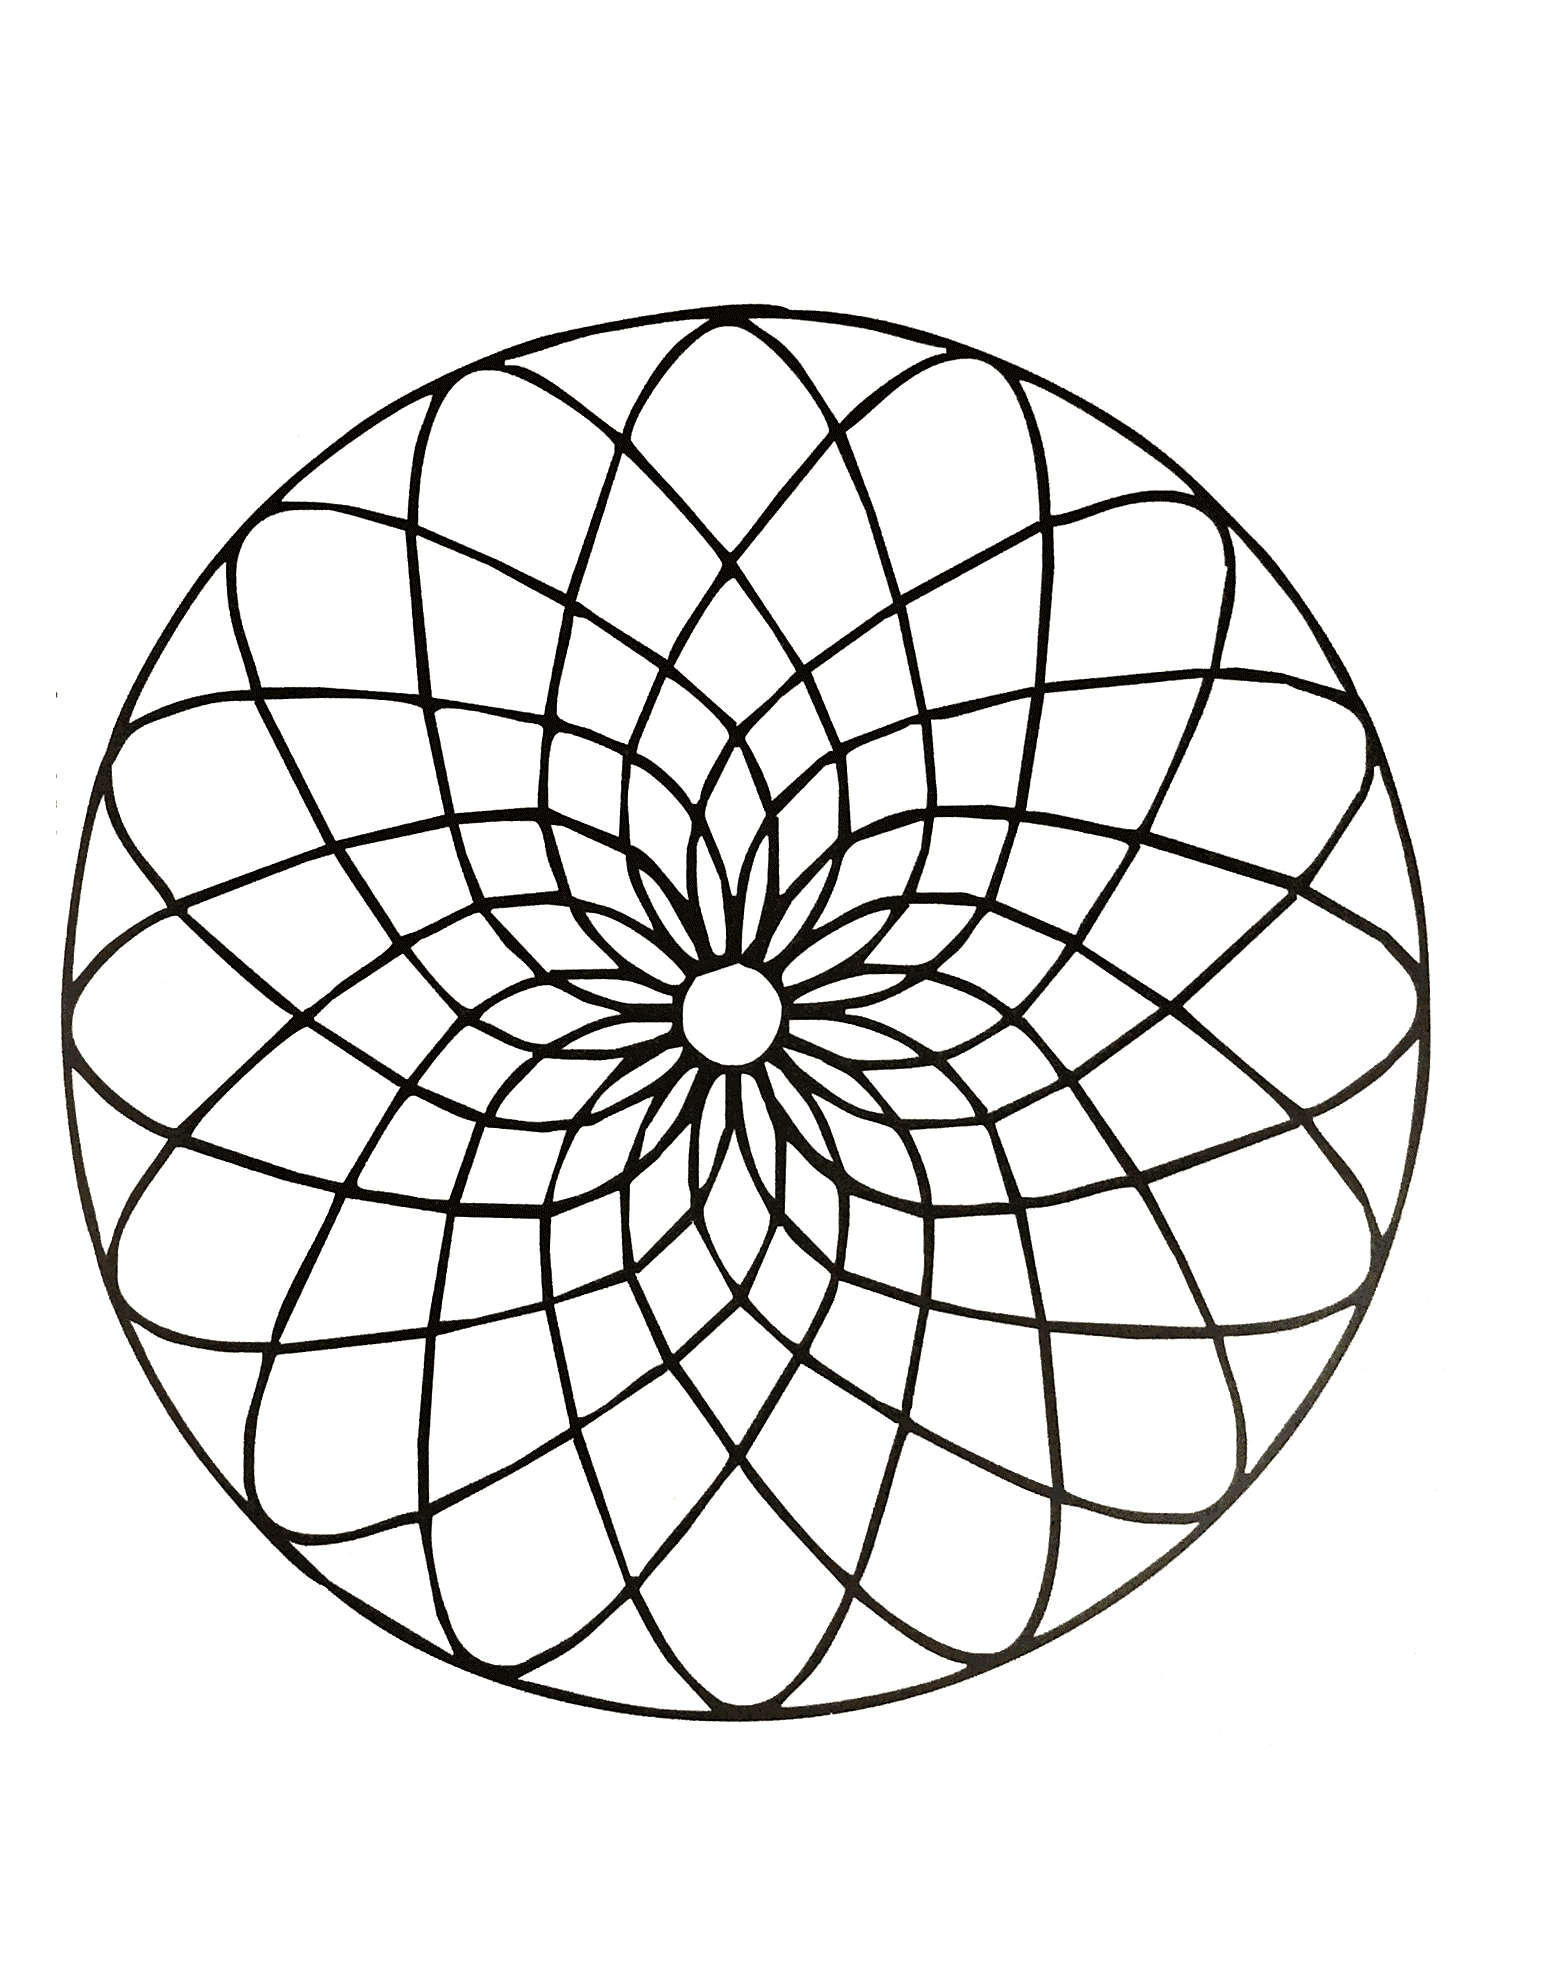 Mandalas geometric to print - 9